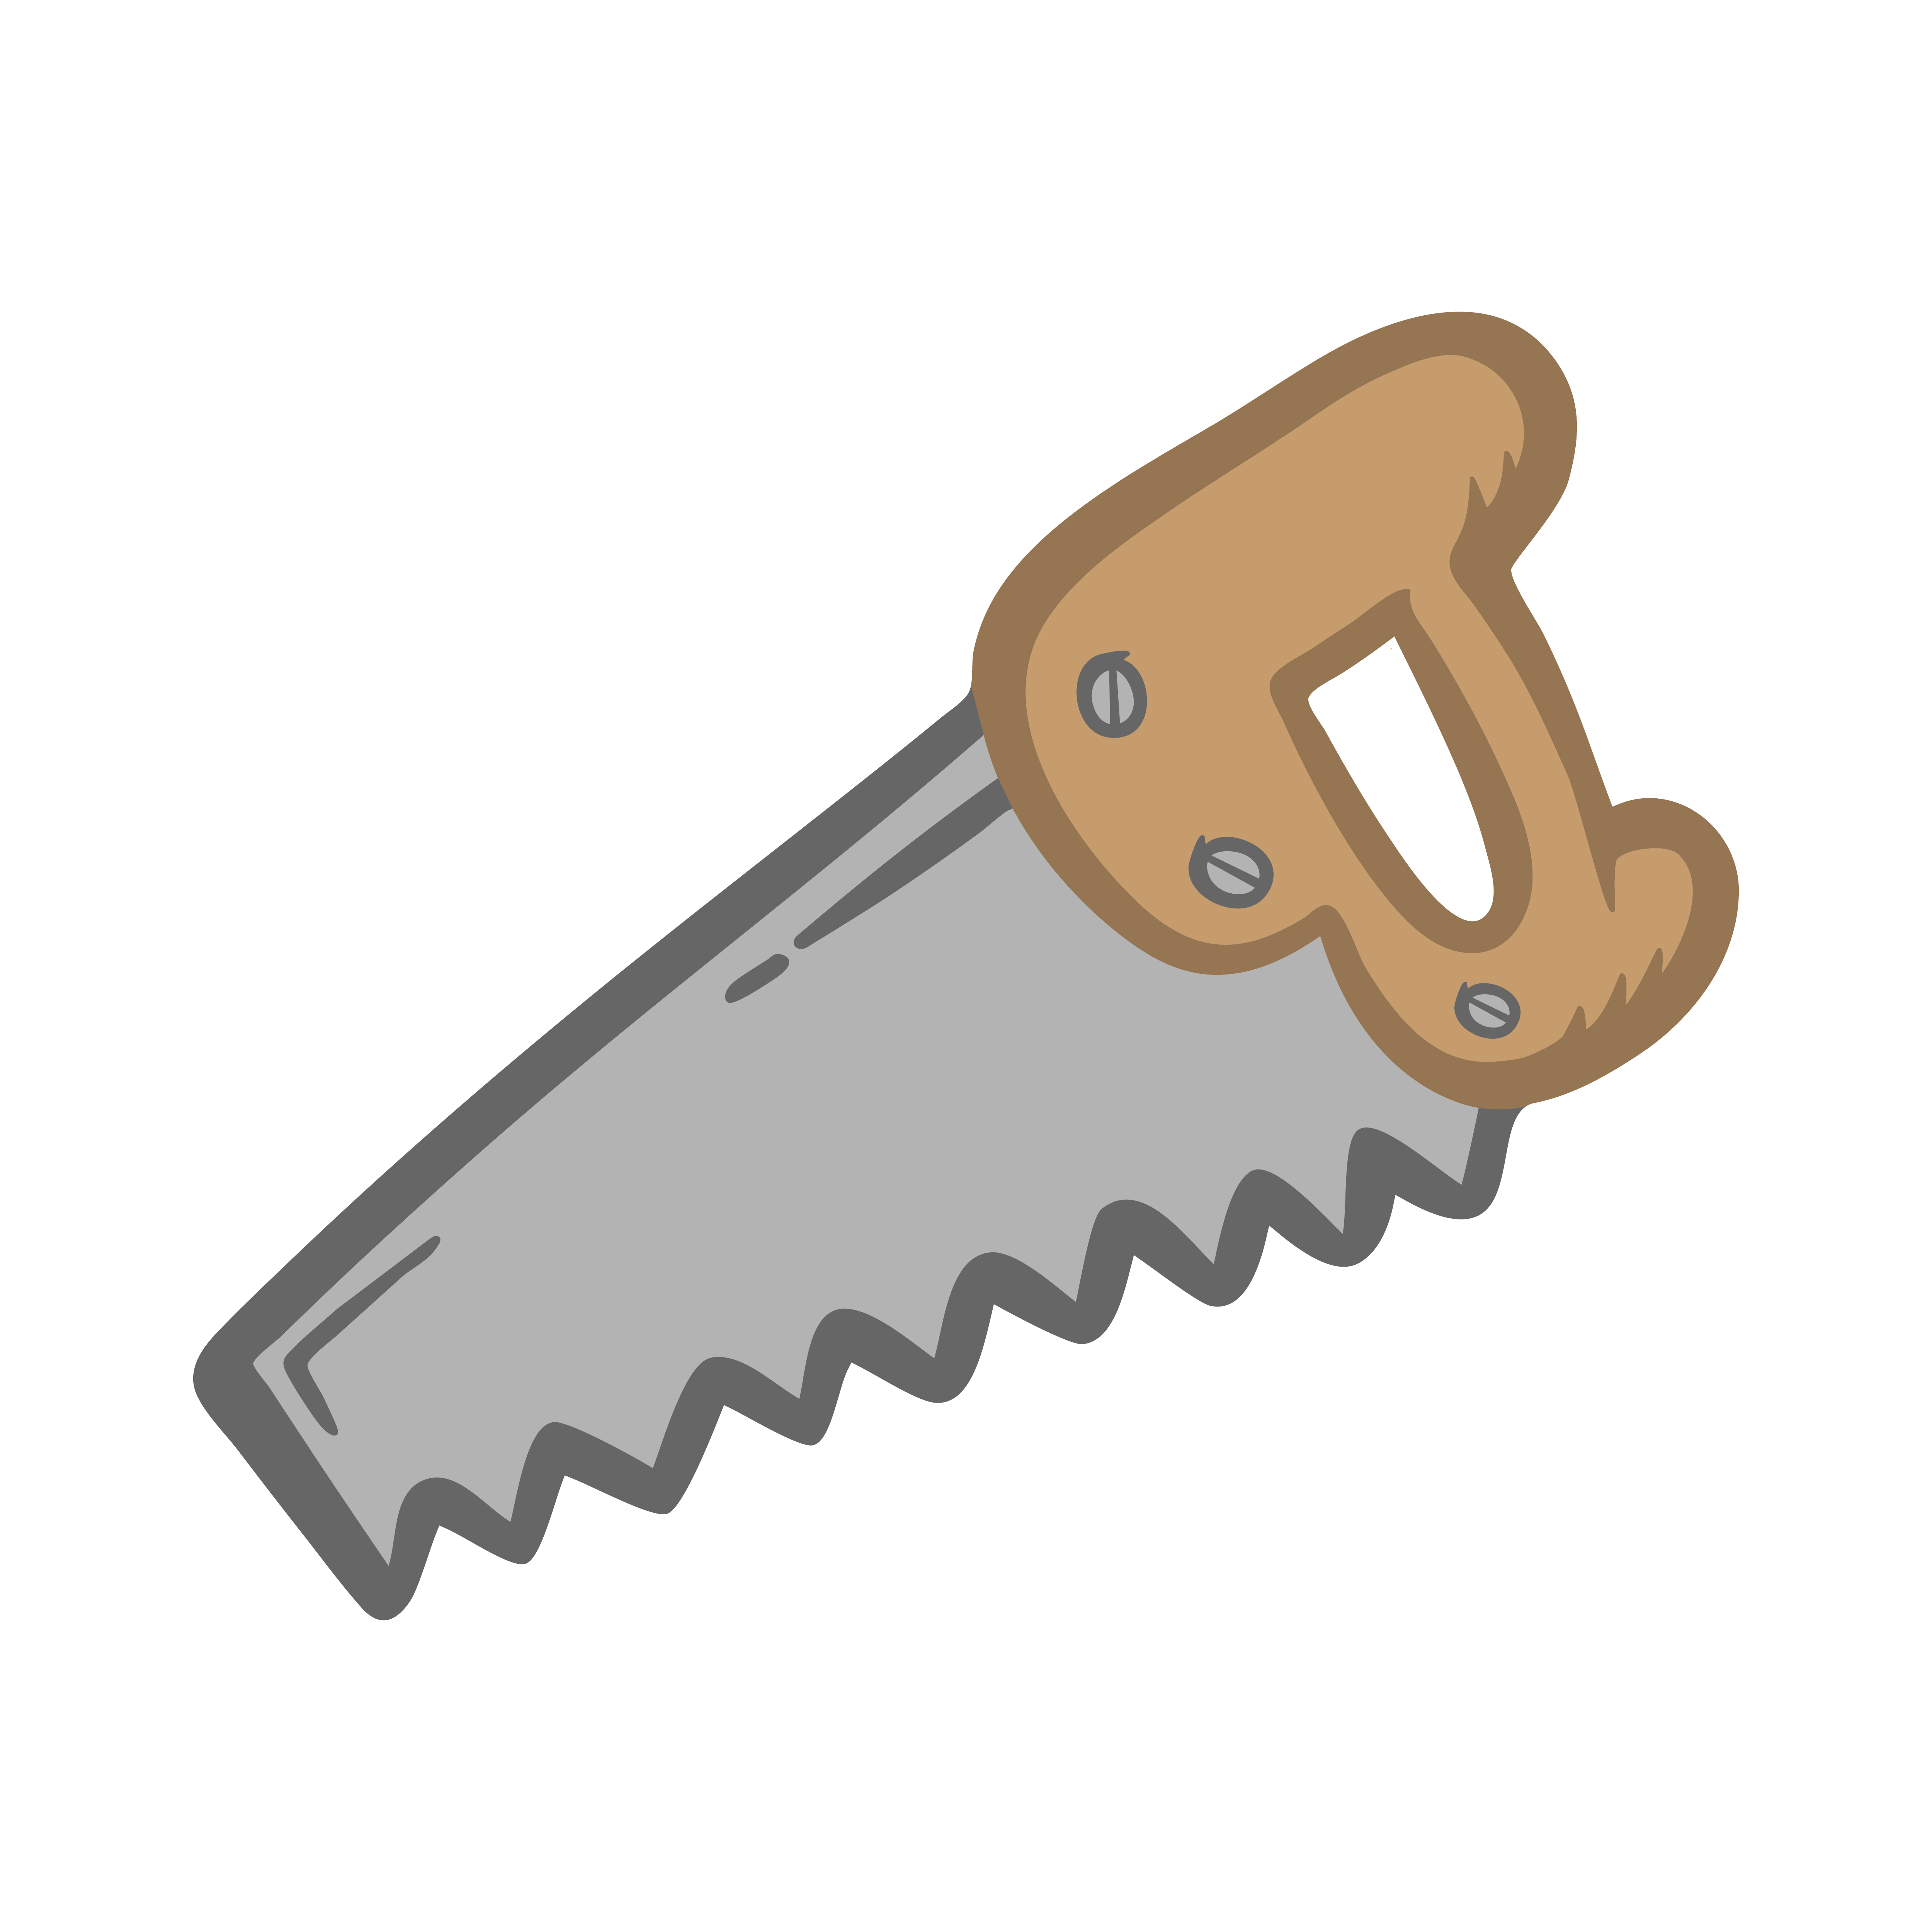 Hand saw construction tool for cutting wood. Cartoon illustration